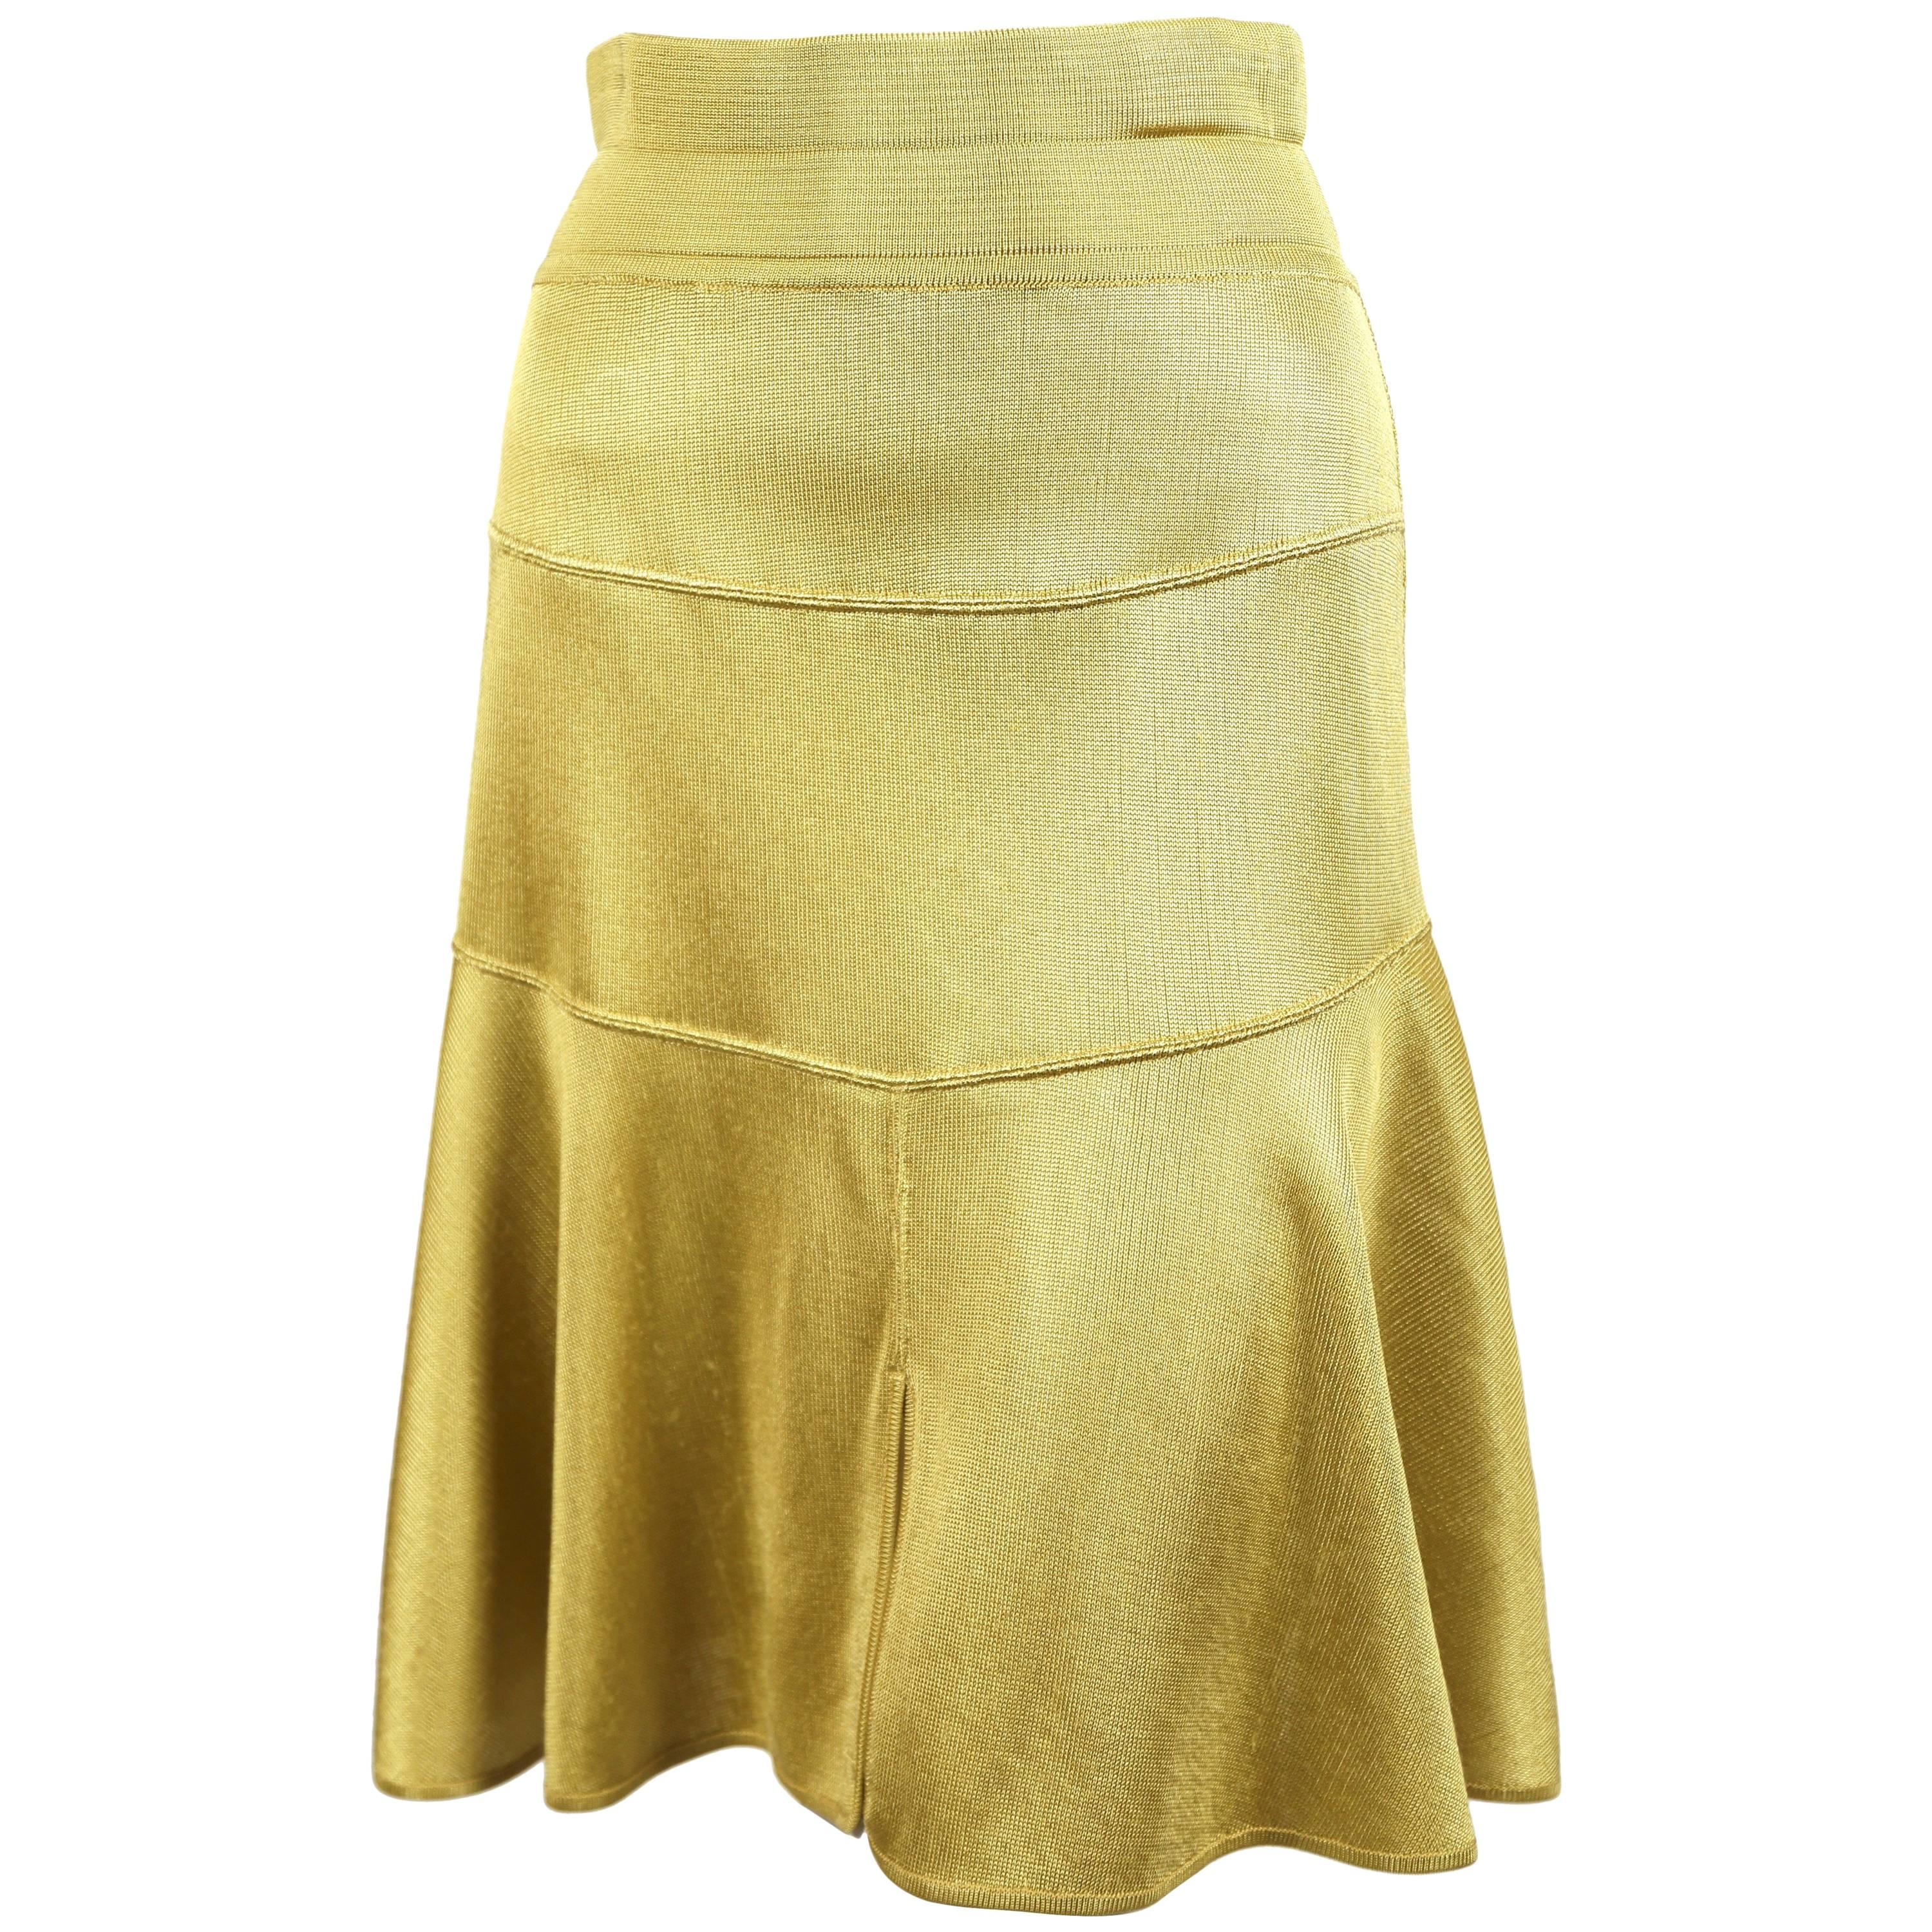 1980's AZZEDINE ALAIA yellow seamed skirt with high waist